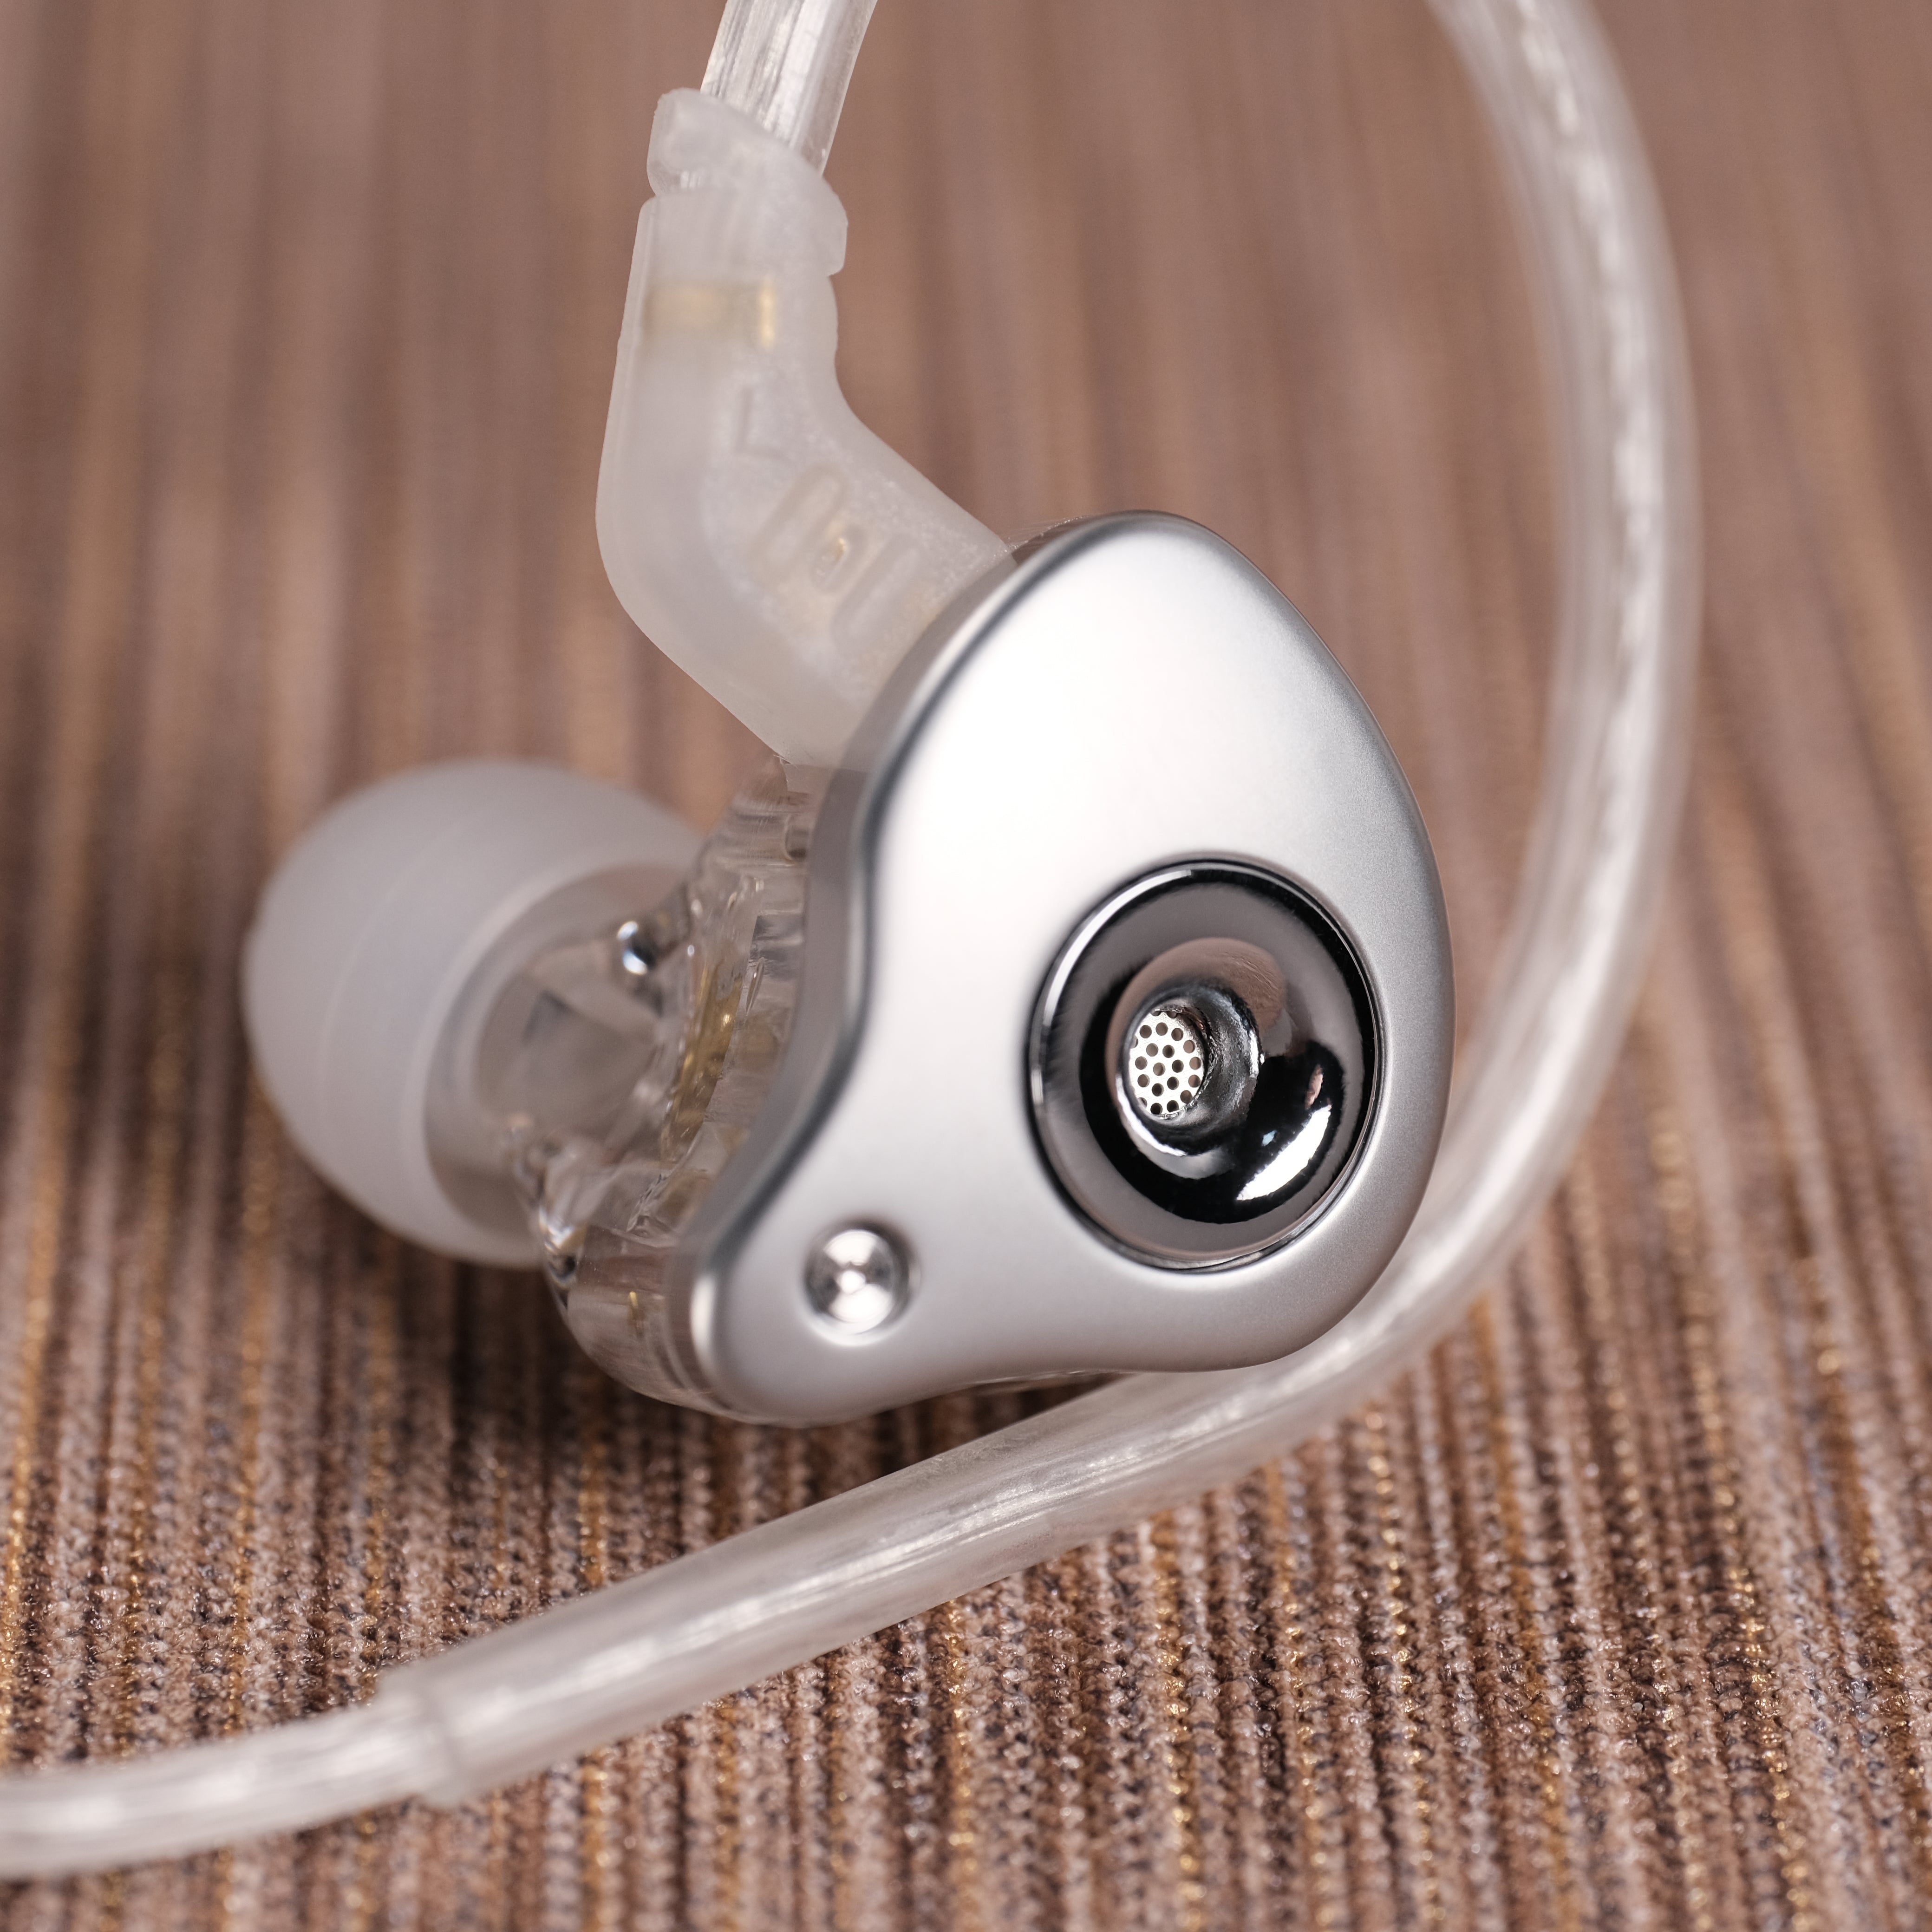 SGOR Venus - Double Magnet Dynamic Hi-Fi earbuds